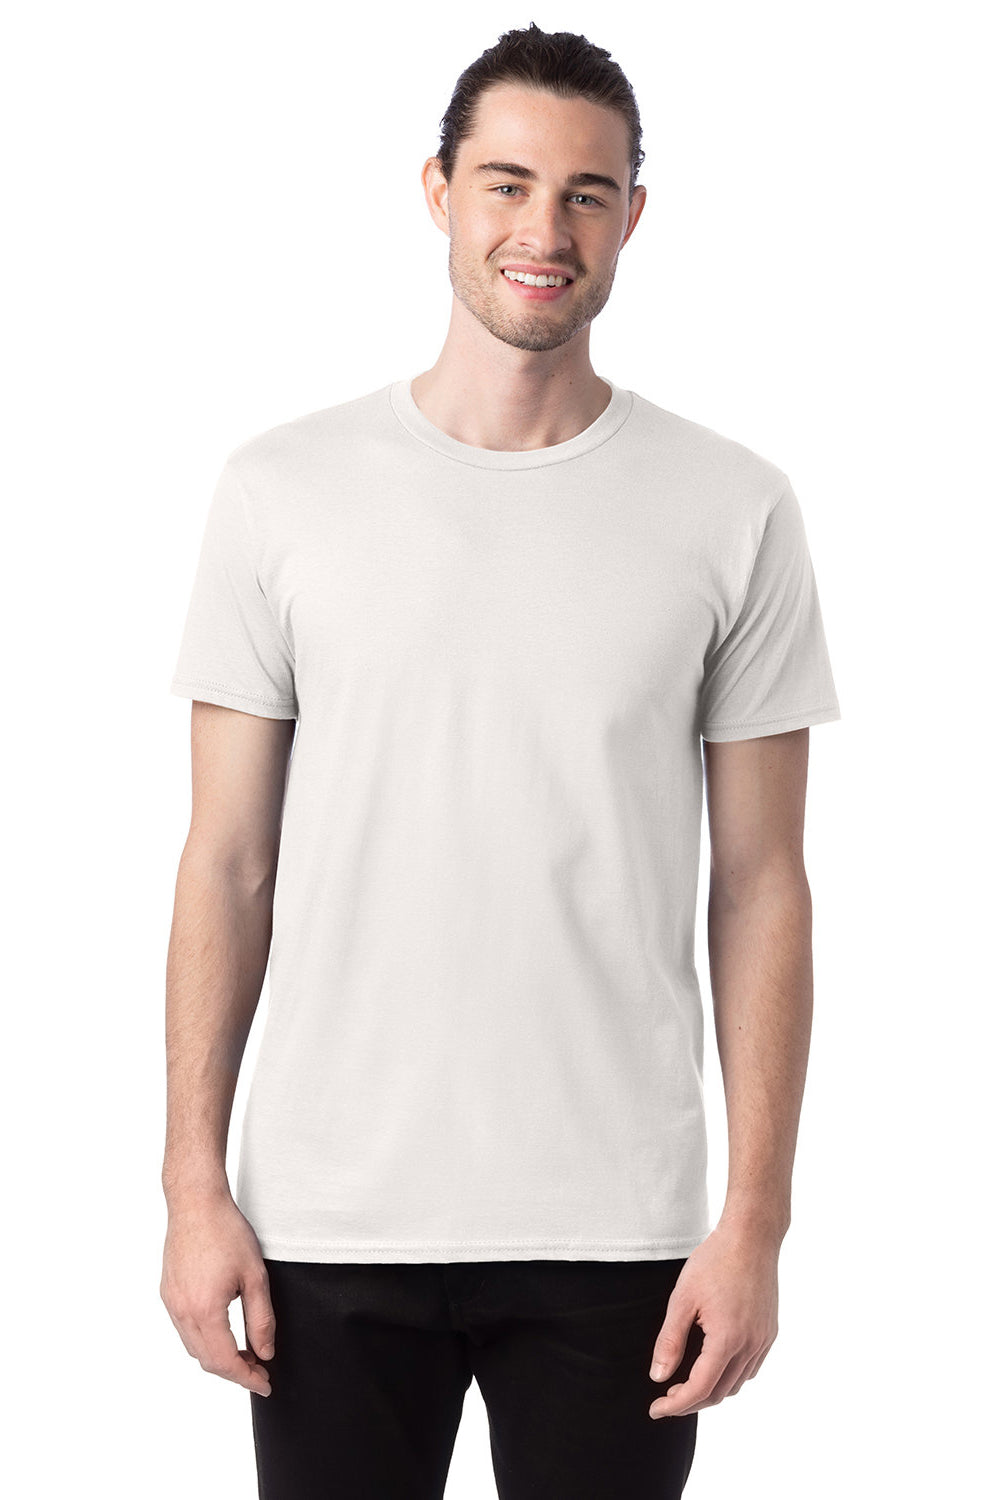 Hanes 4980 Mens Nano-T Short Sleeve Crewneck T-Shirt Parchment Front